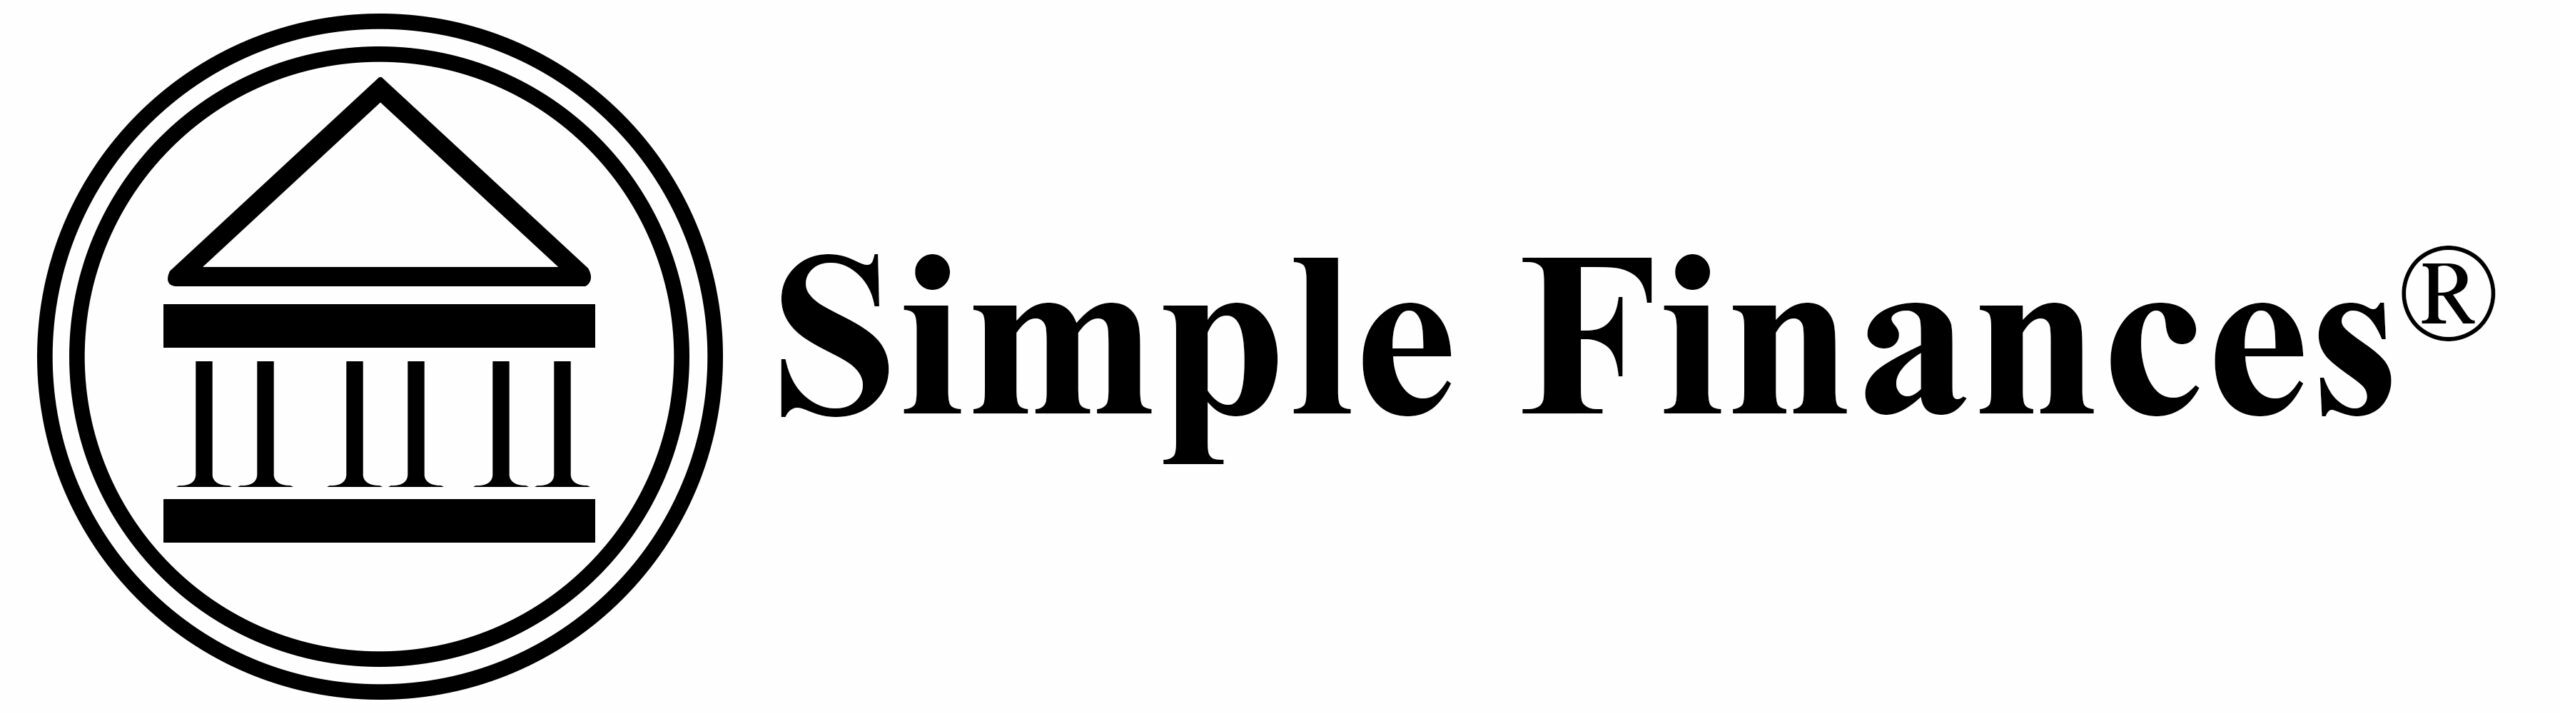 Simple Finances Logo image on www.simplefinances.org